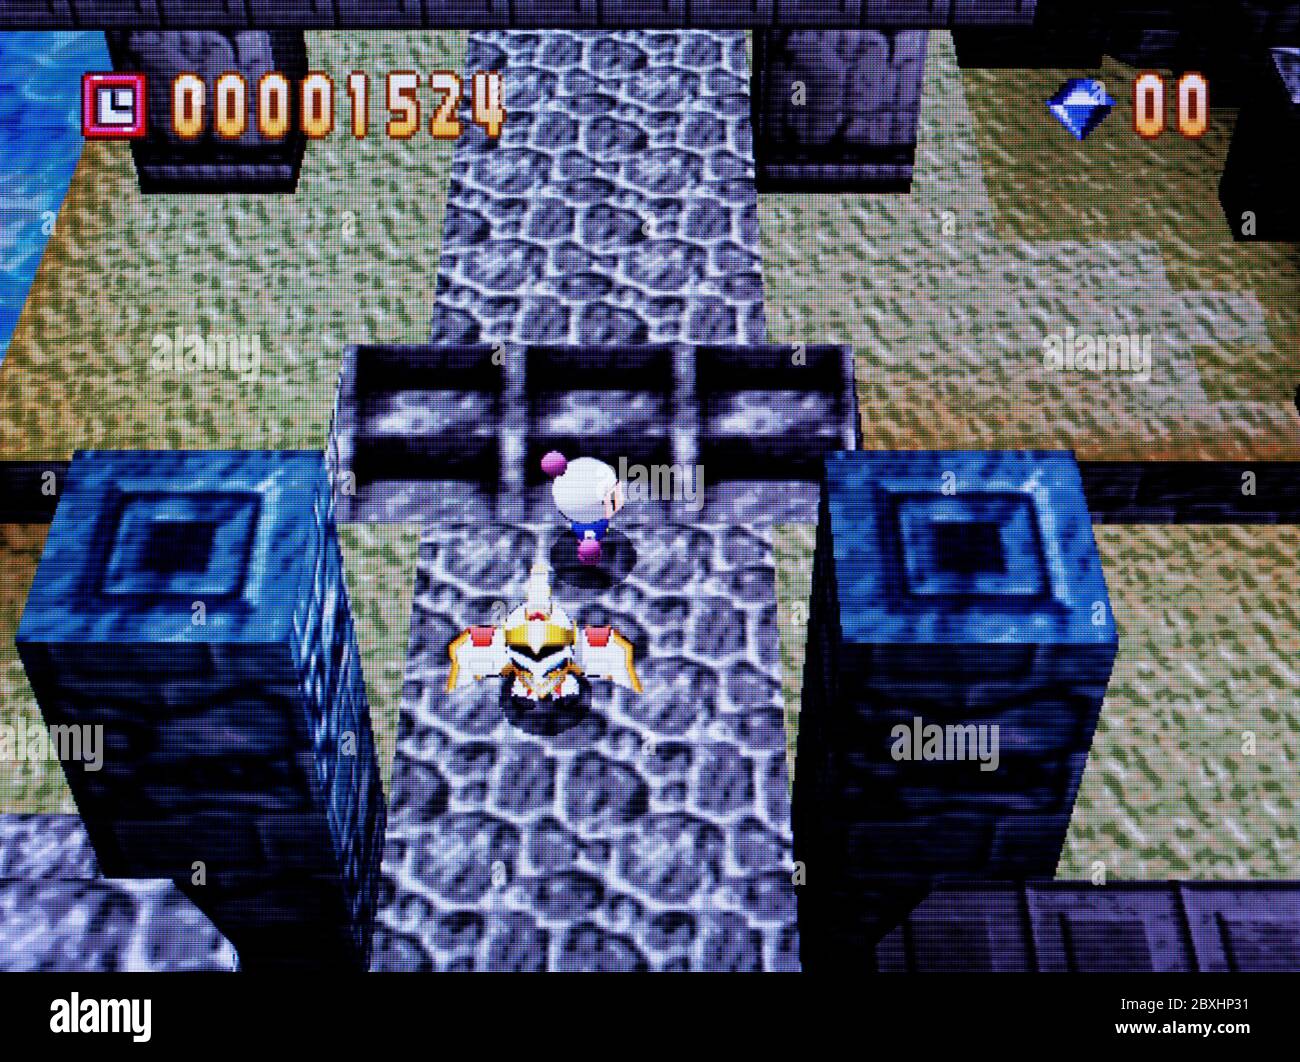 Baku Bomber Man Bomberman - Nintendo 64 Videogame - Editorial use only  Stock Photo - Alamy